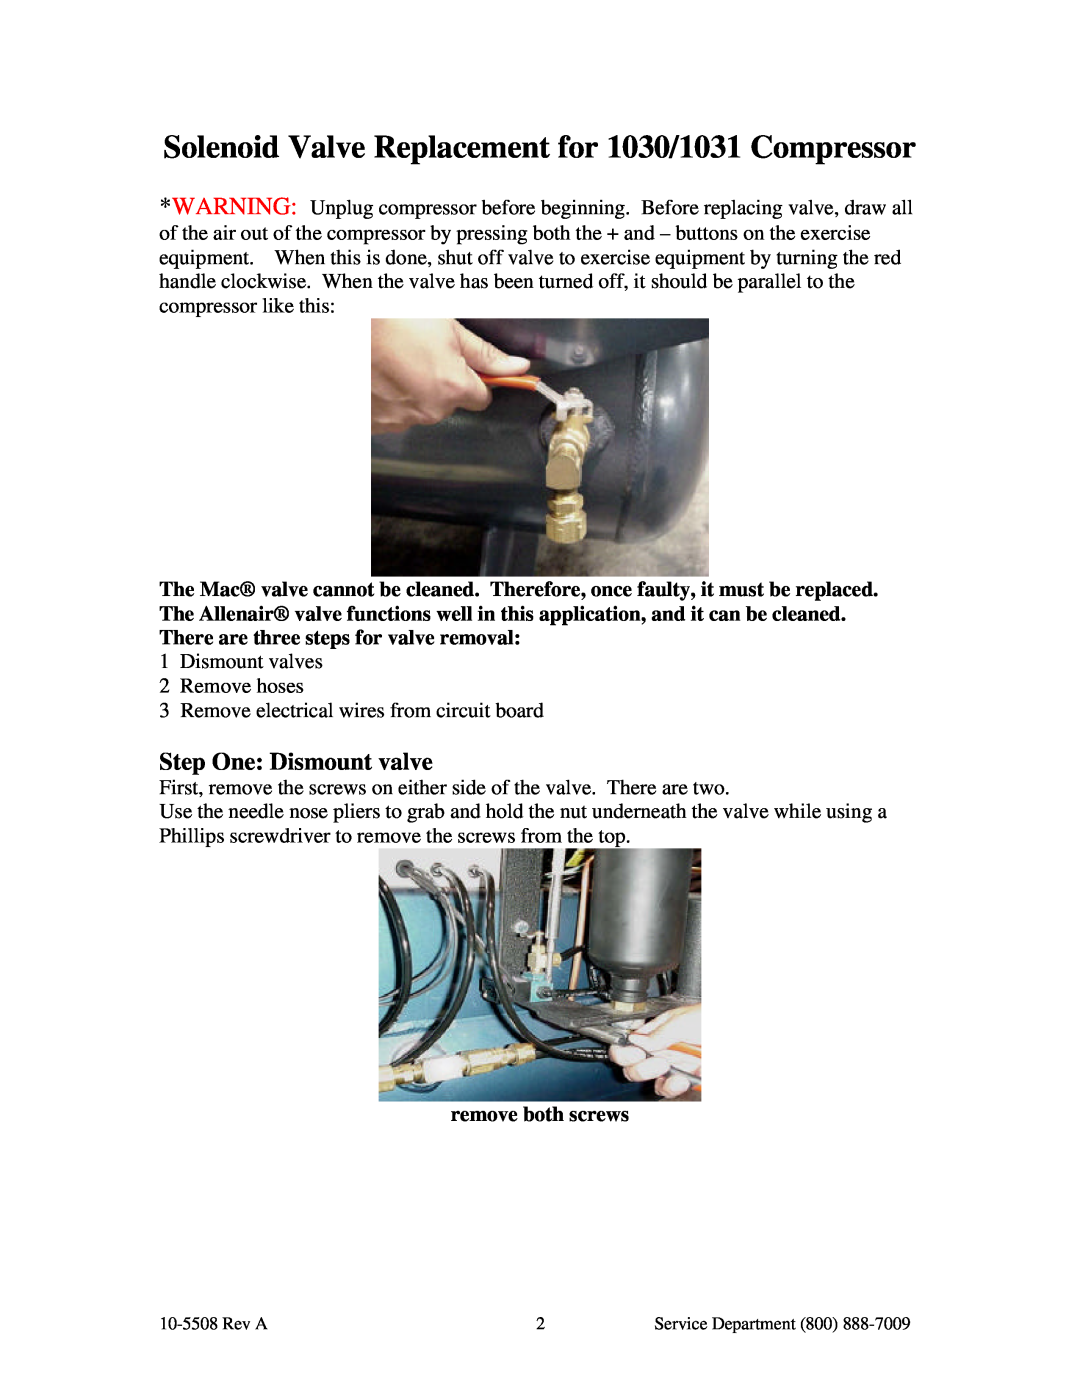 Keiser manual Step One Dismount valve, Solenoid Valve Replacement for 1030/1031 Compressor, remove both screws 